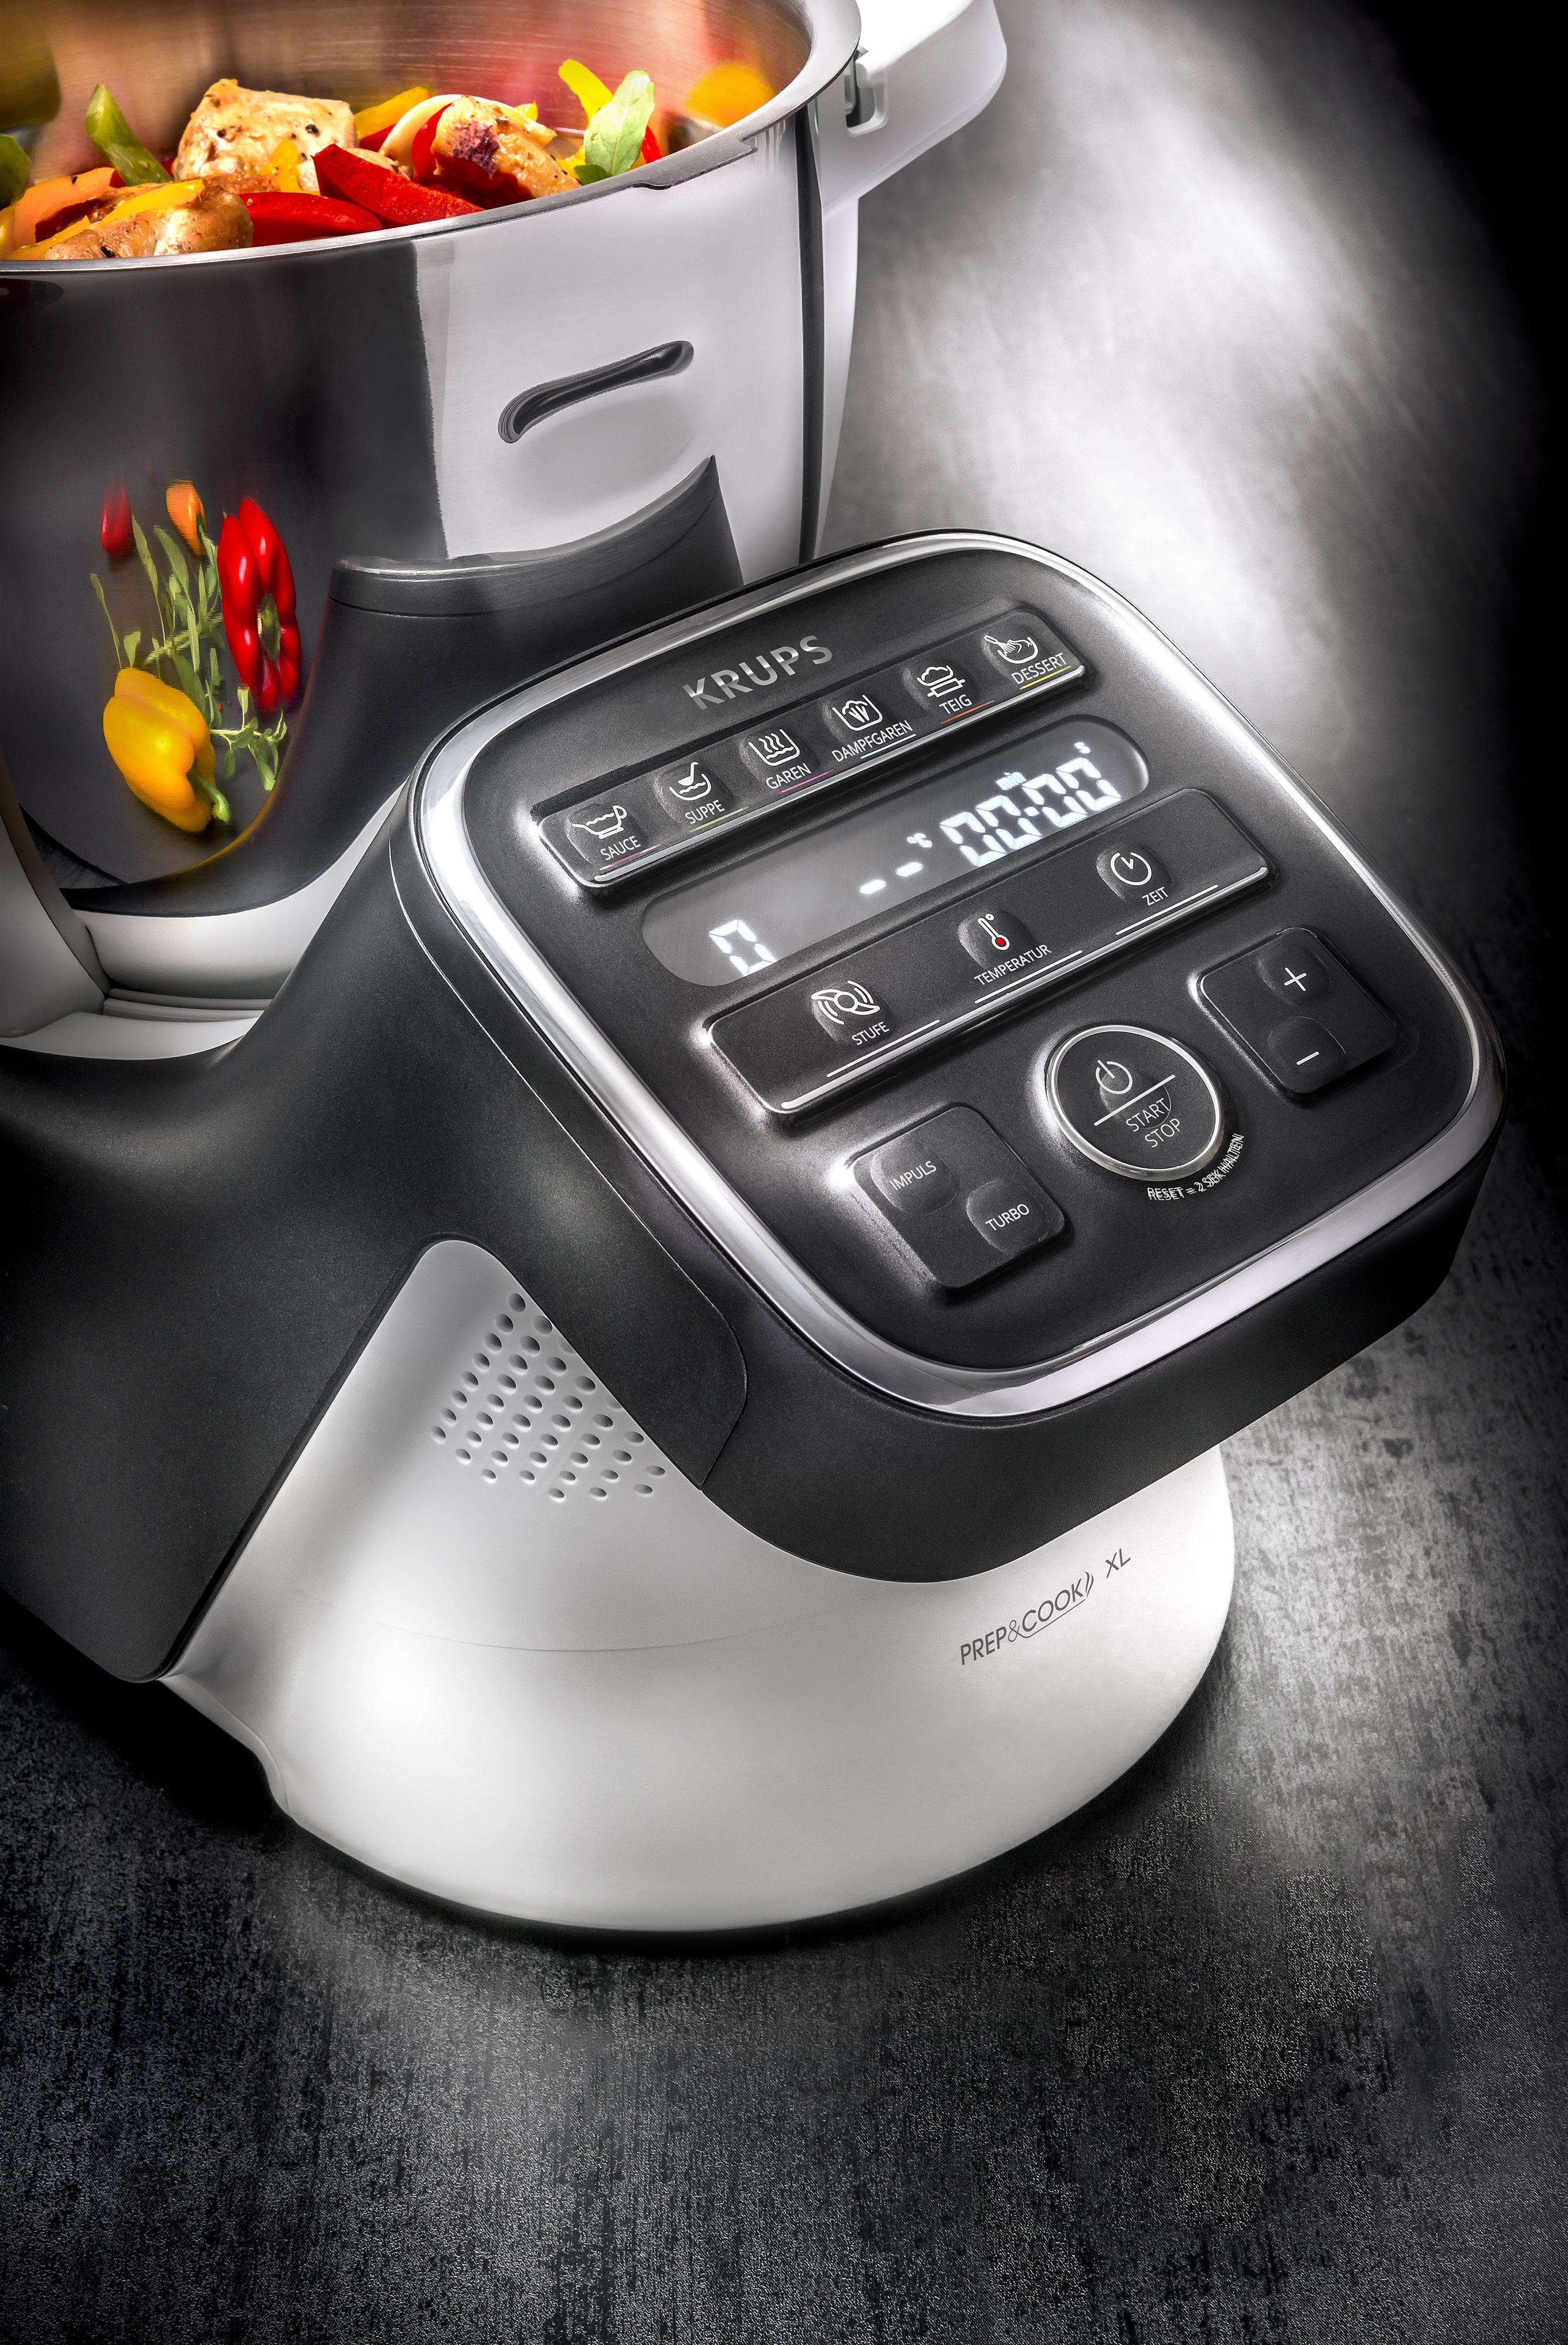 KRUPS HP50A8 Prep&Cook XL Küchenmaschine Watt) Weiß/Anthrazit l, Kochfunktion 1550 mit 3 (Rührschüsselkapazität